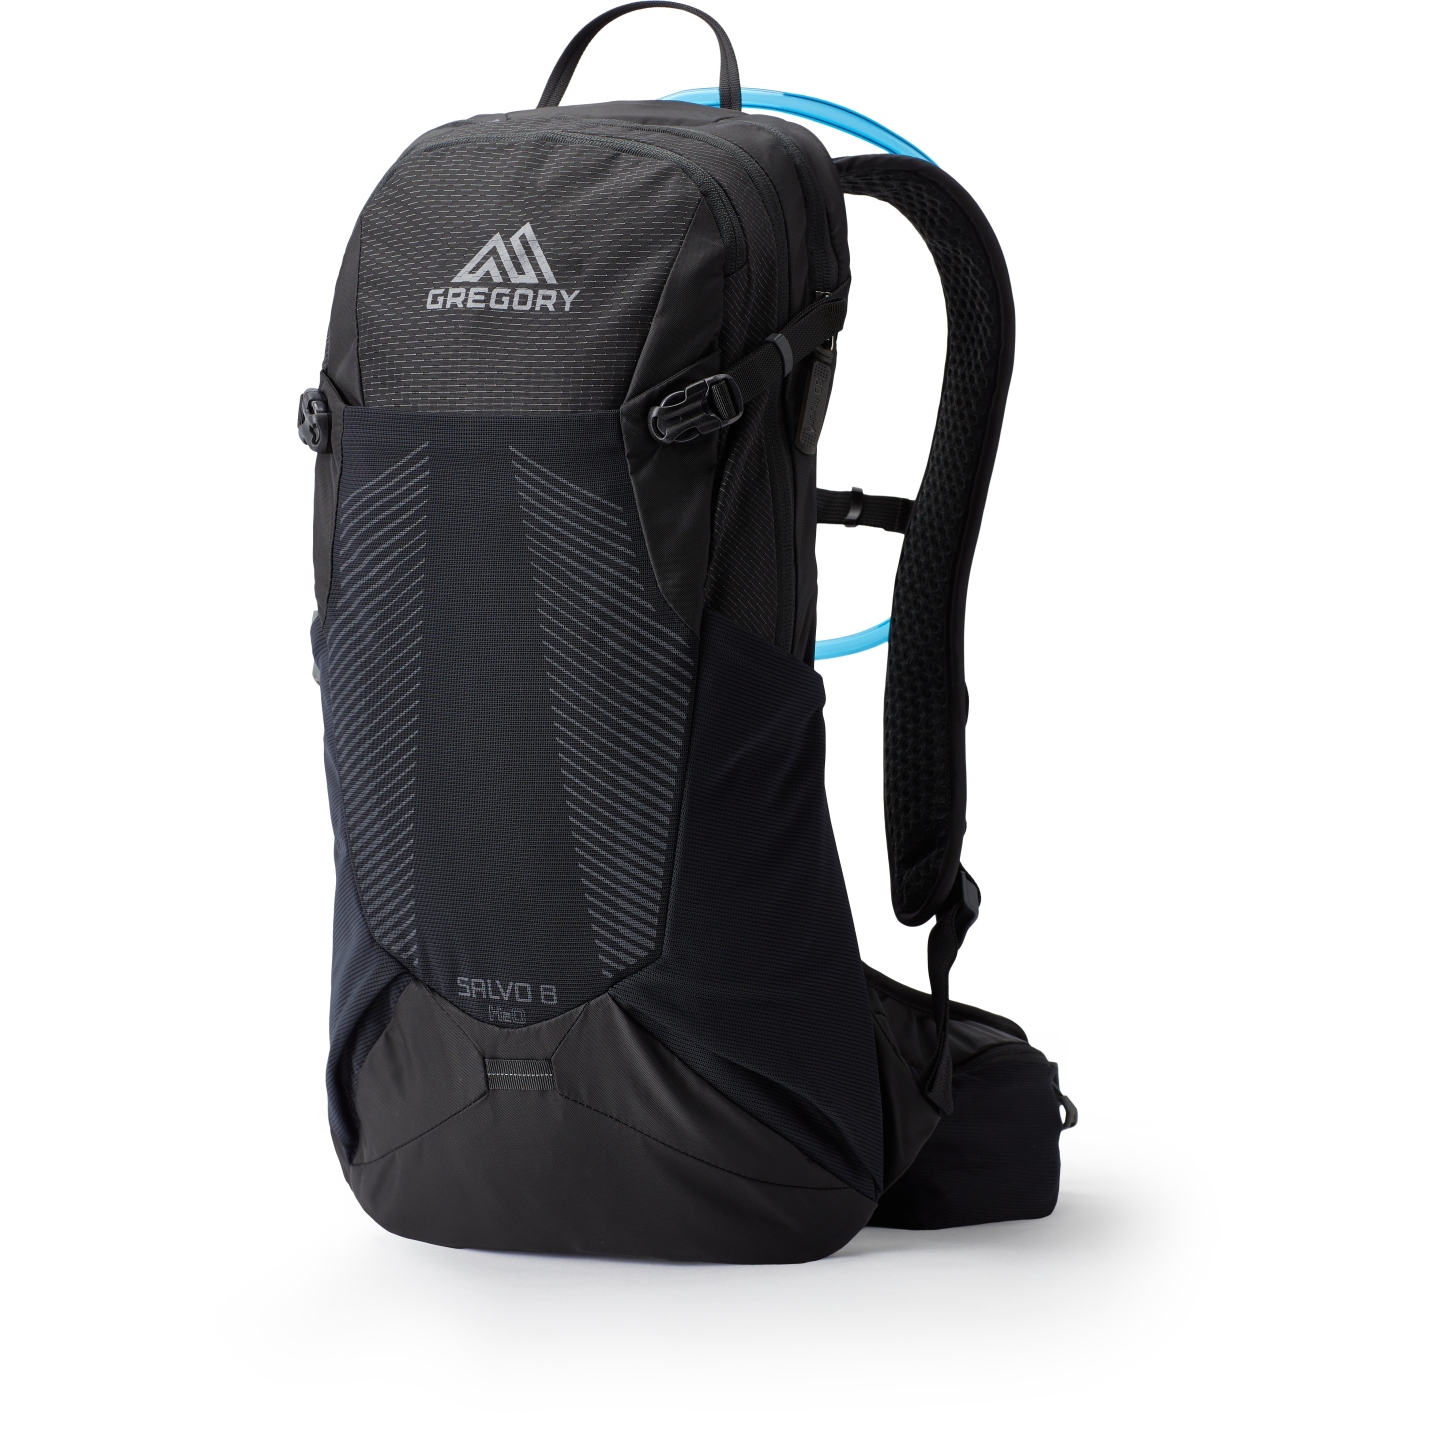 Productfoto van Gregory Salvo 8 H2O Backpack - Ozone Black